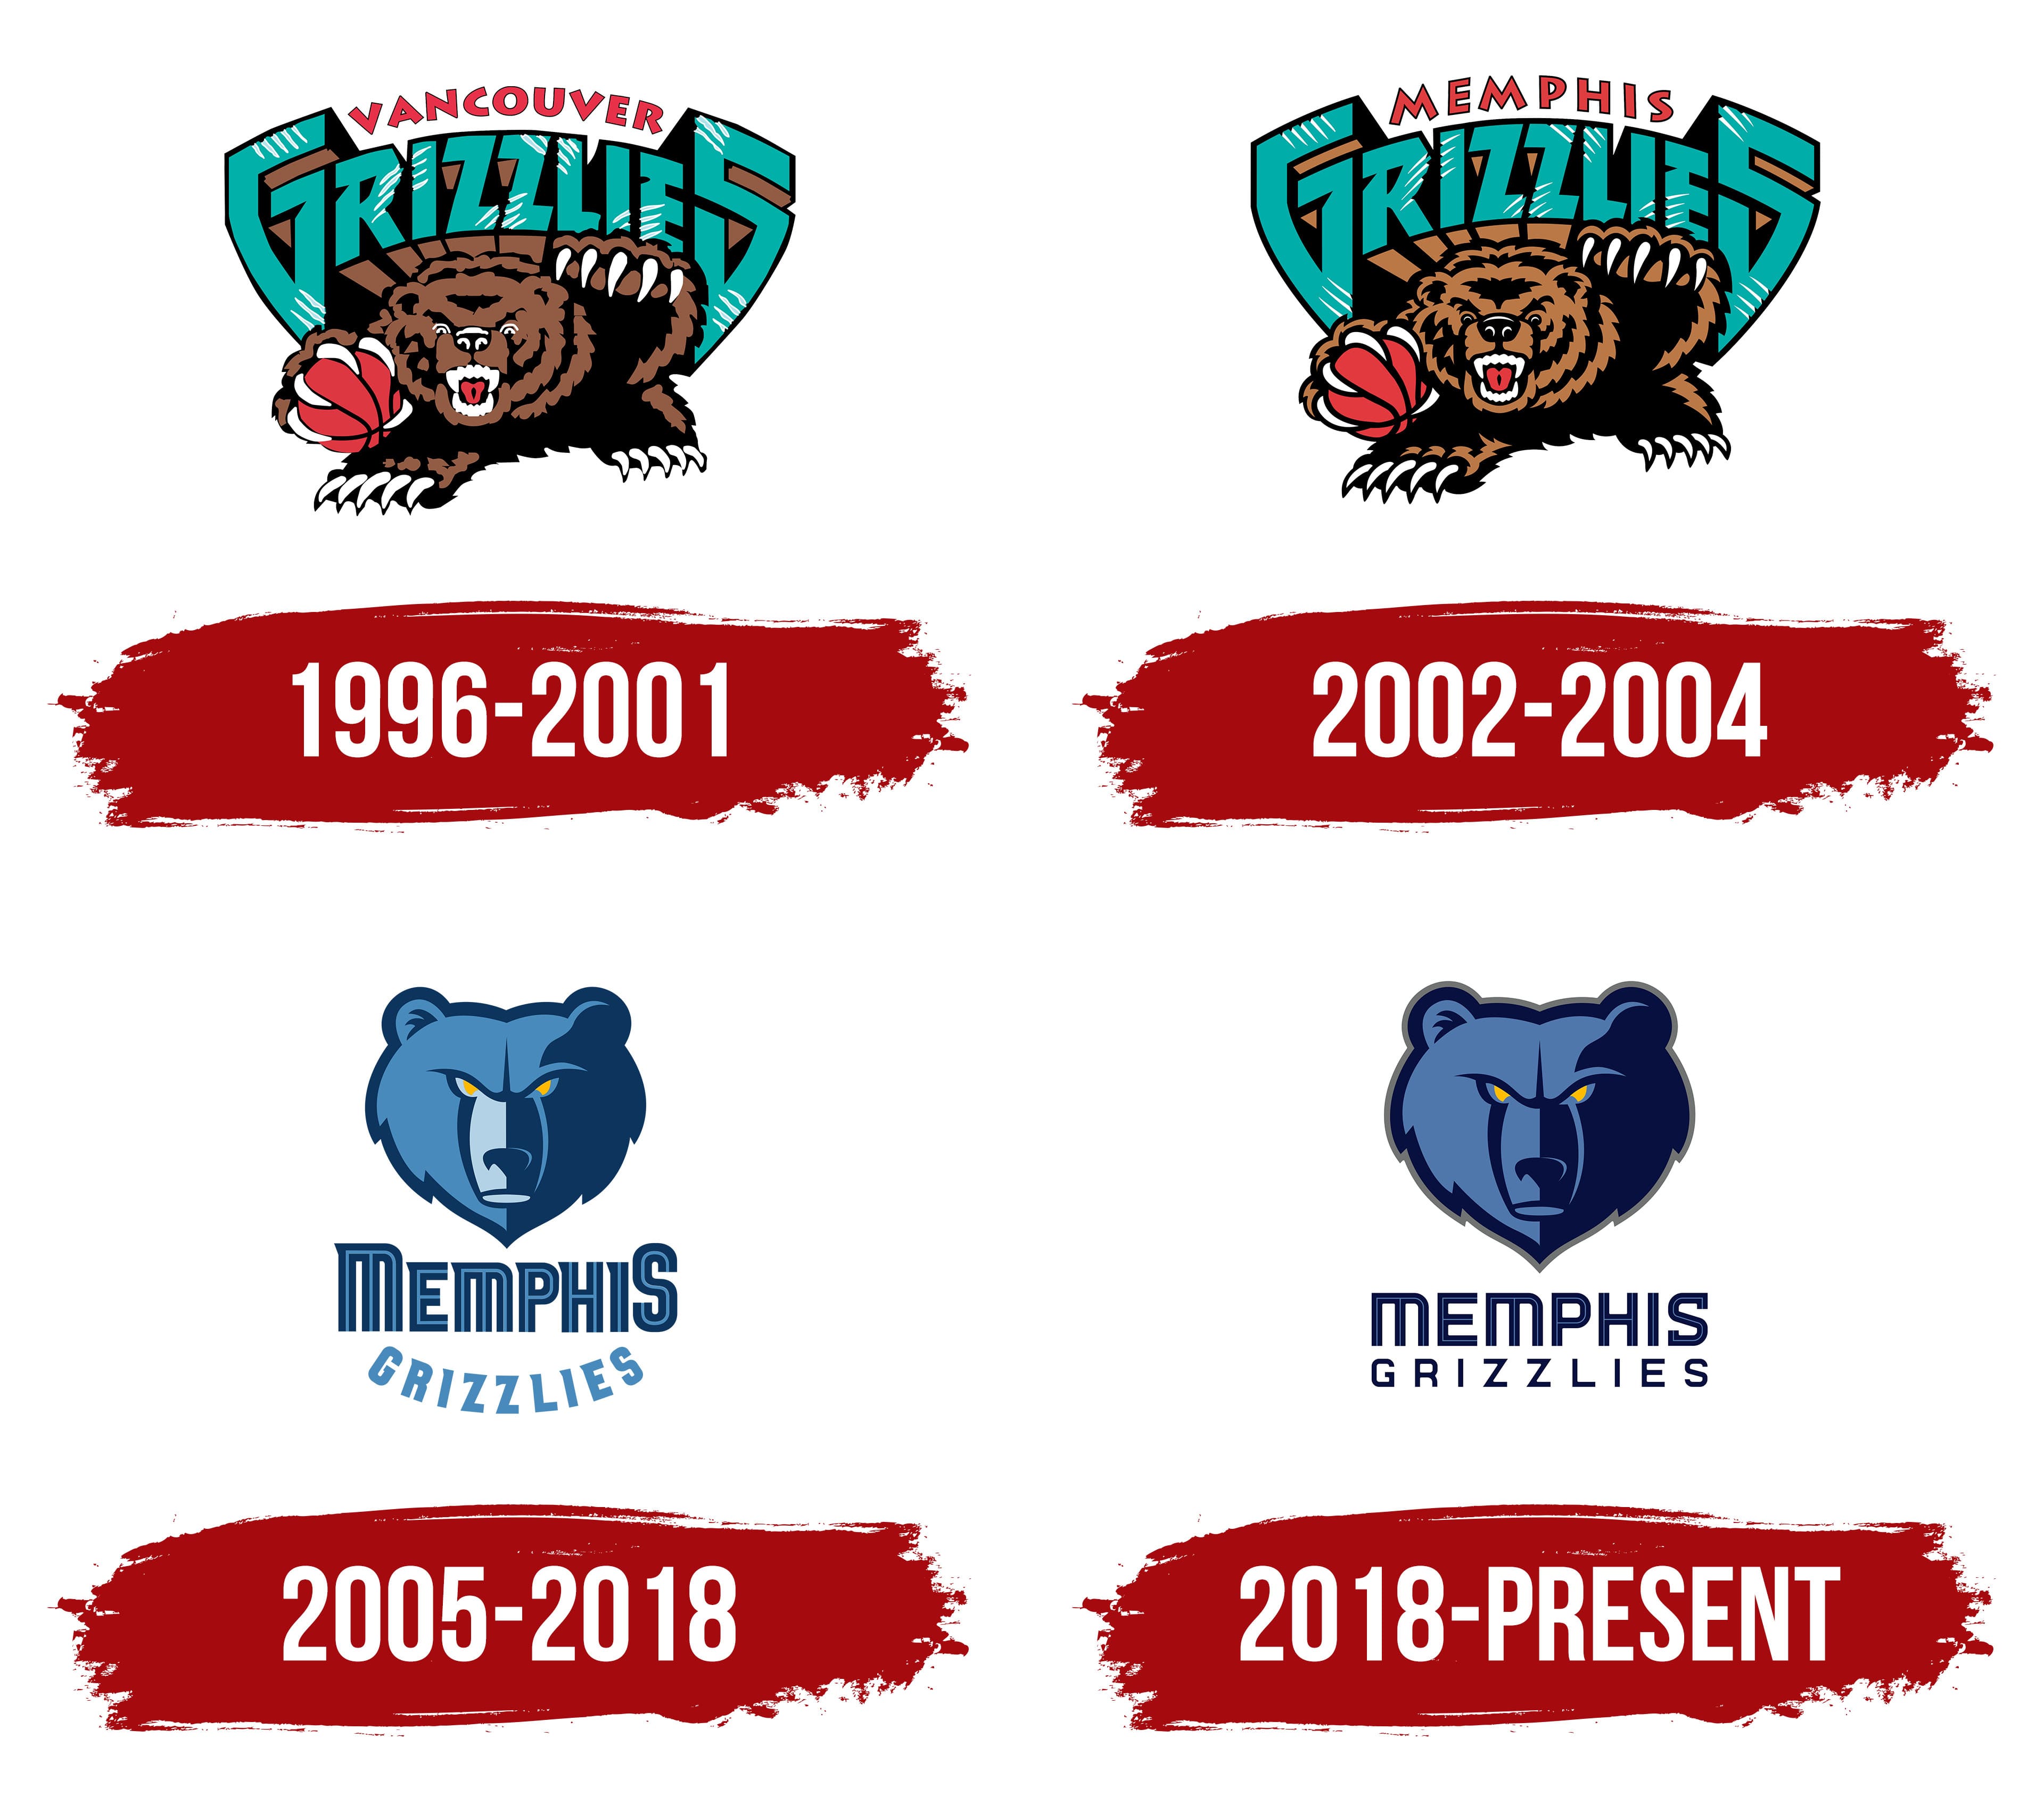 Vancouver Grizzlies  Memphis grizzlies, Grizzly, Sports team logos